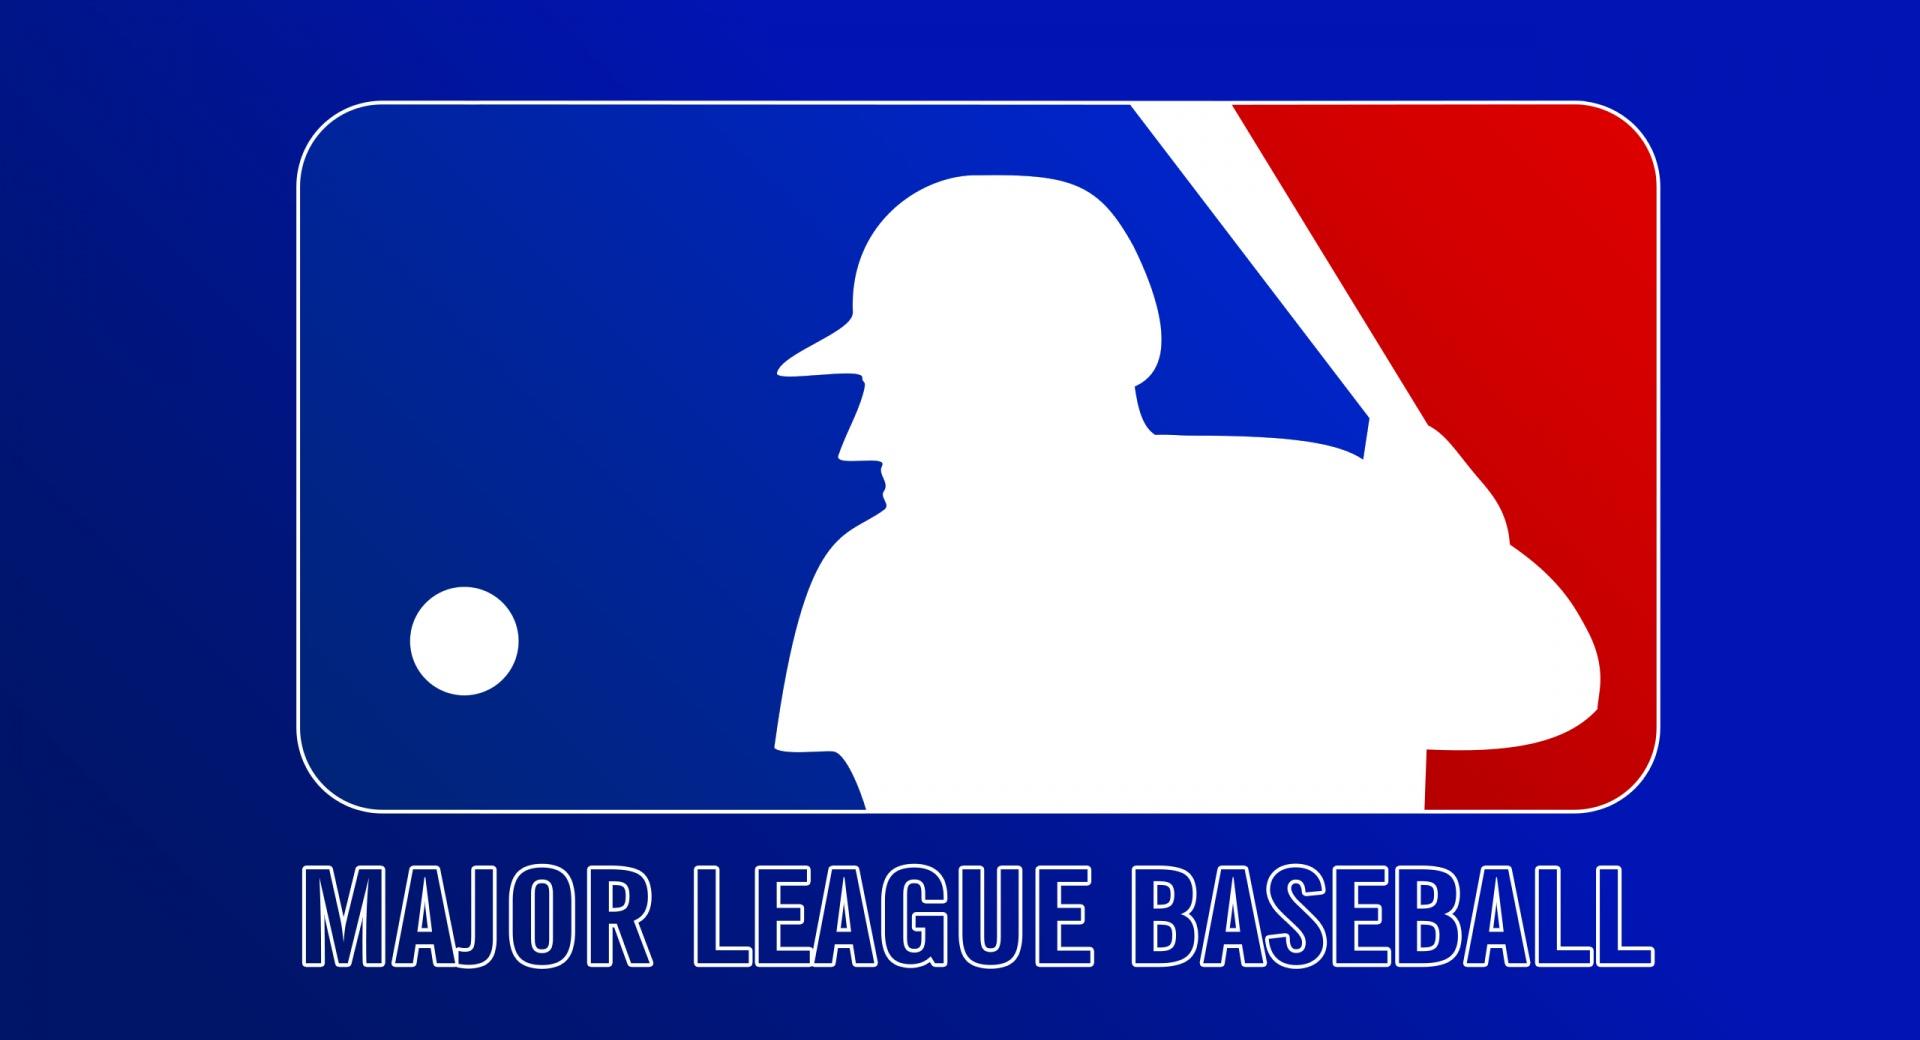 Major League Baseball (MLB) at 1024 x 1024 iPad size wallpapers HD quality